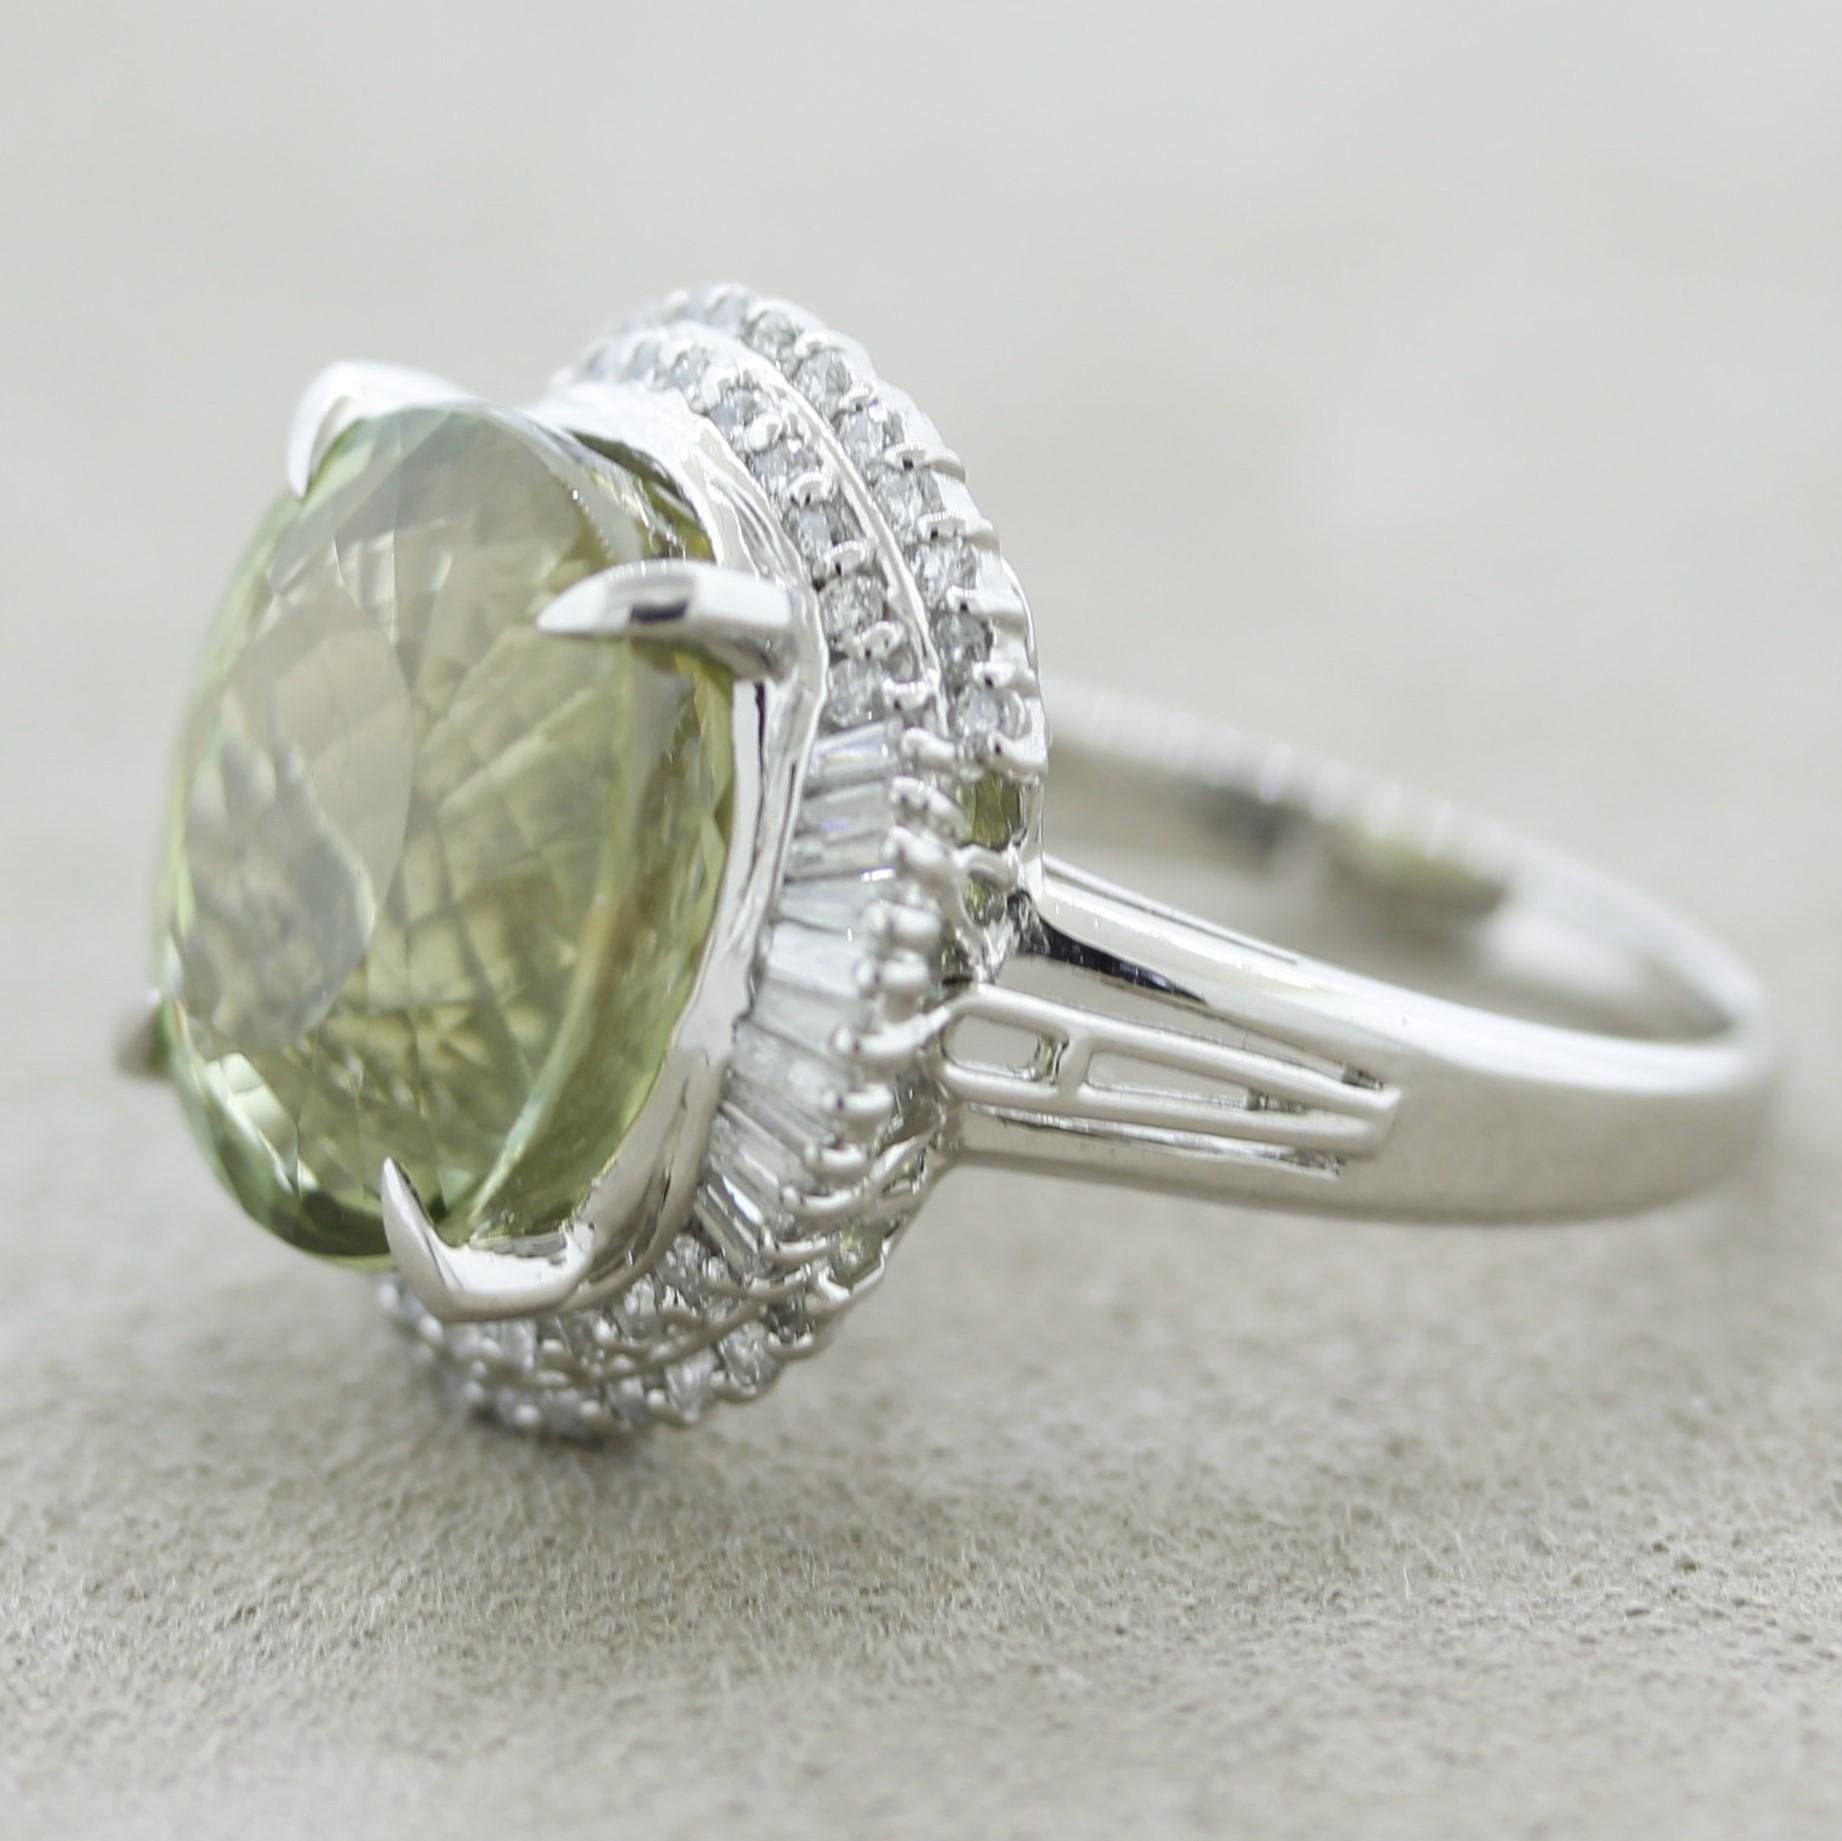 Mixed Cut Green Tourmaline Diamond Platinum Ring For Sale